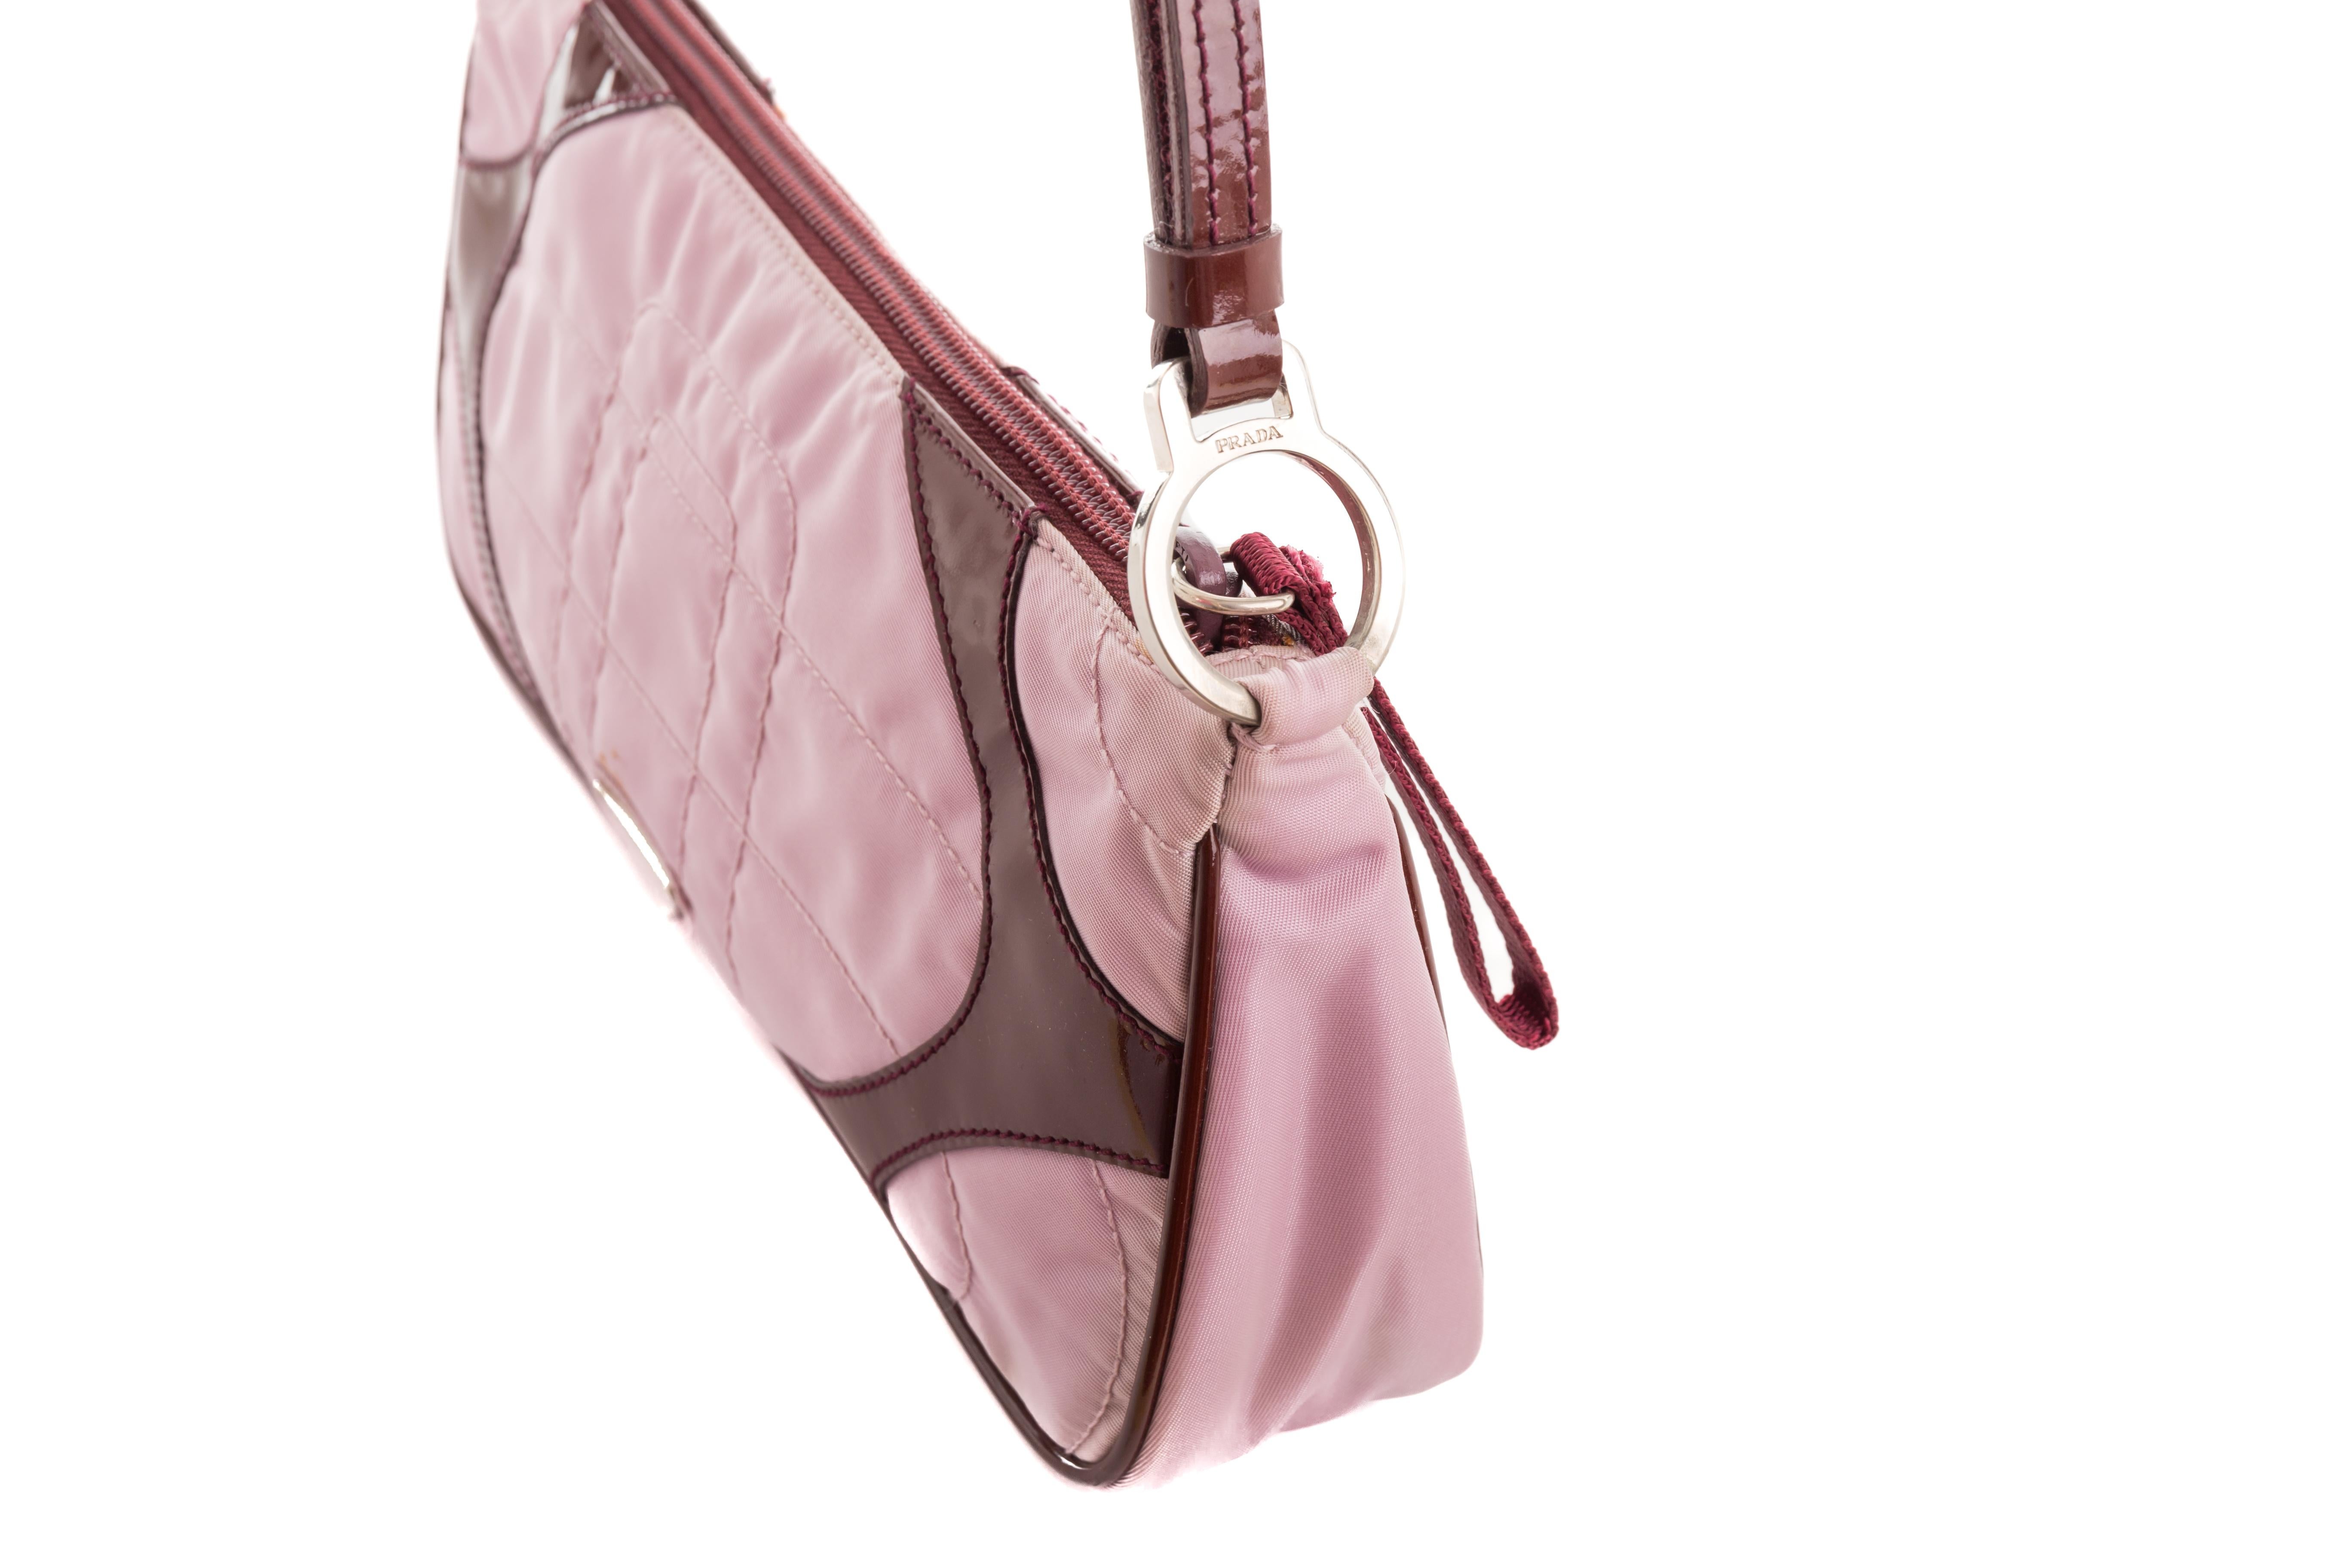 Mini sac de sport Prada S/S 2000 rose et bordeaux Unisexe en vente